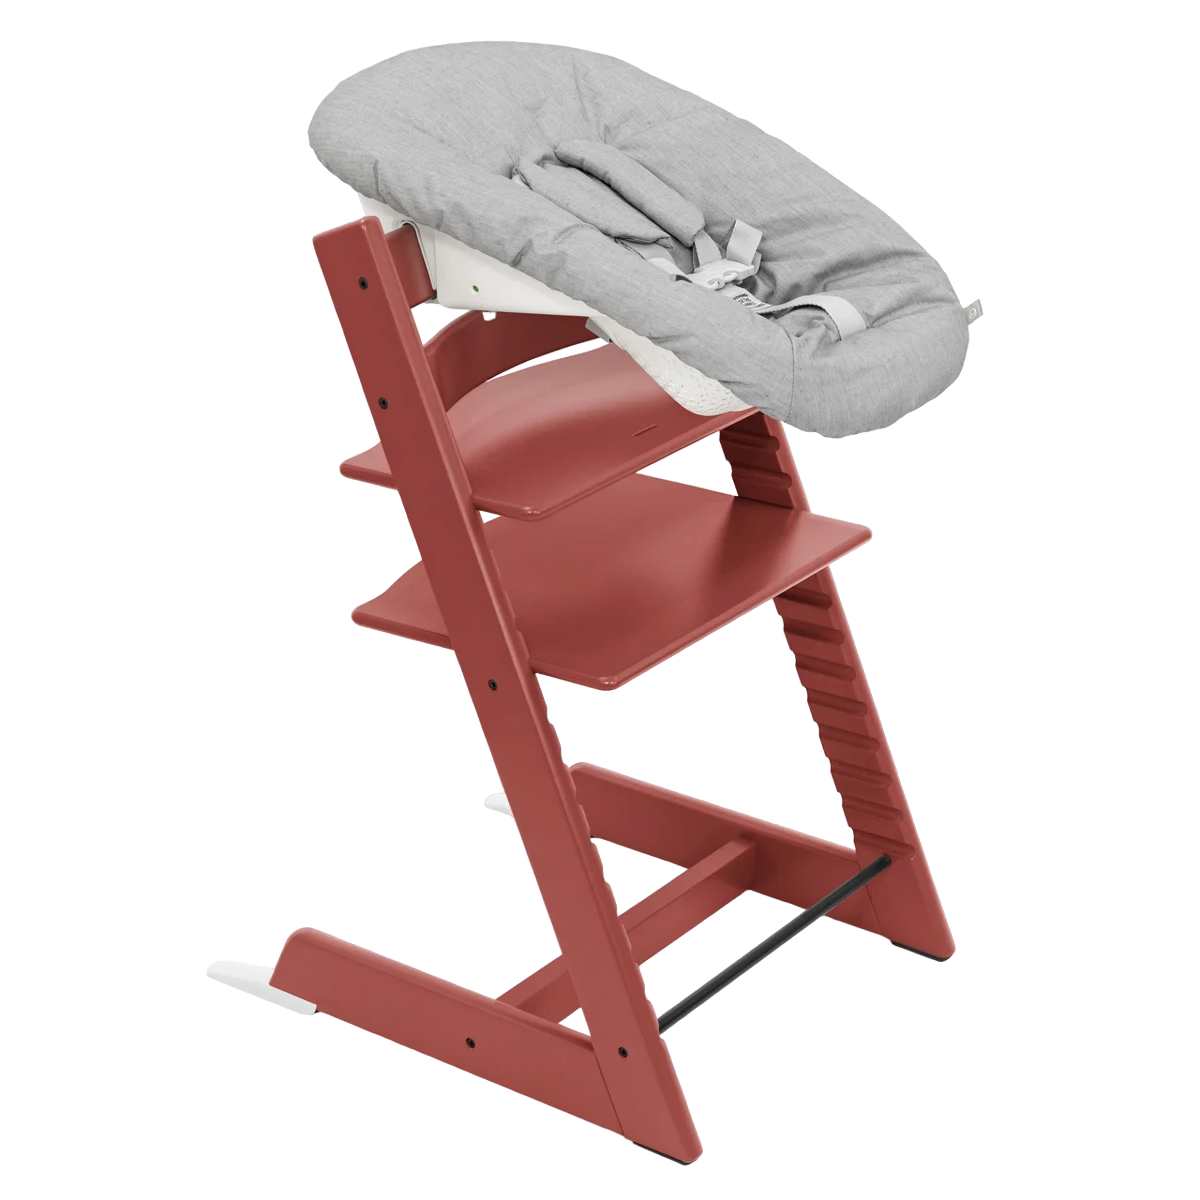 Набор Stokke Newborn Tripp Trapp Warm Red: стульчик и кресло для новорожденных (k.100136.52) - фото 1